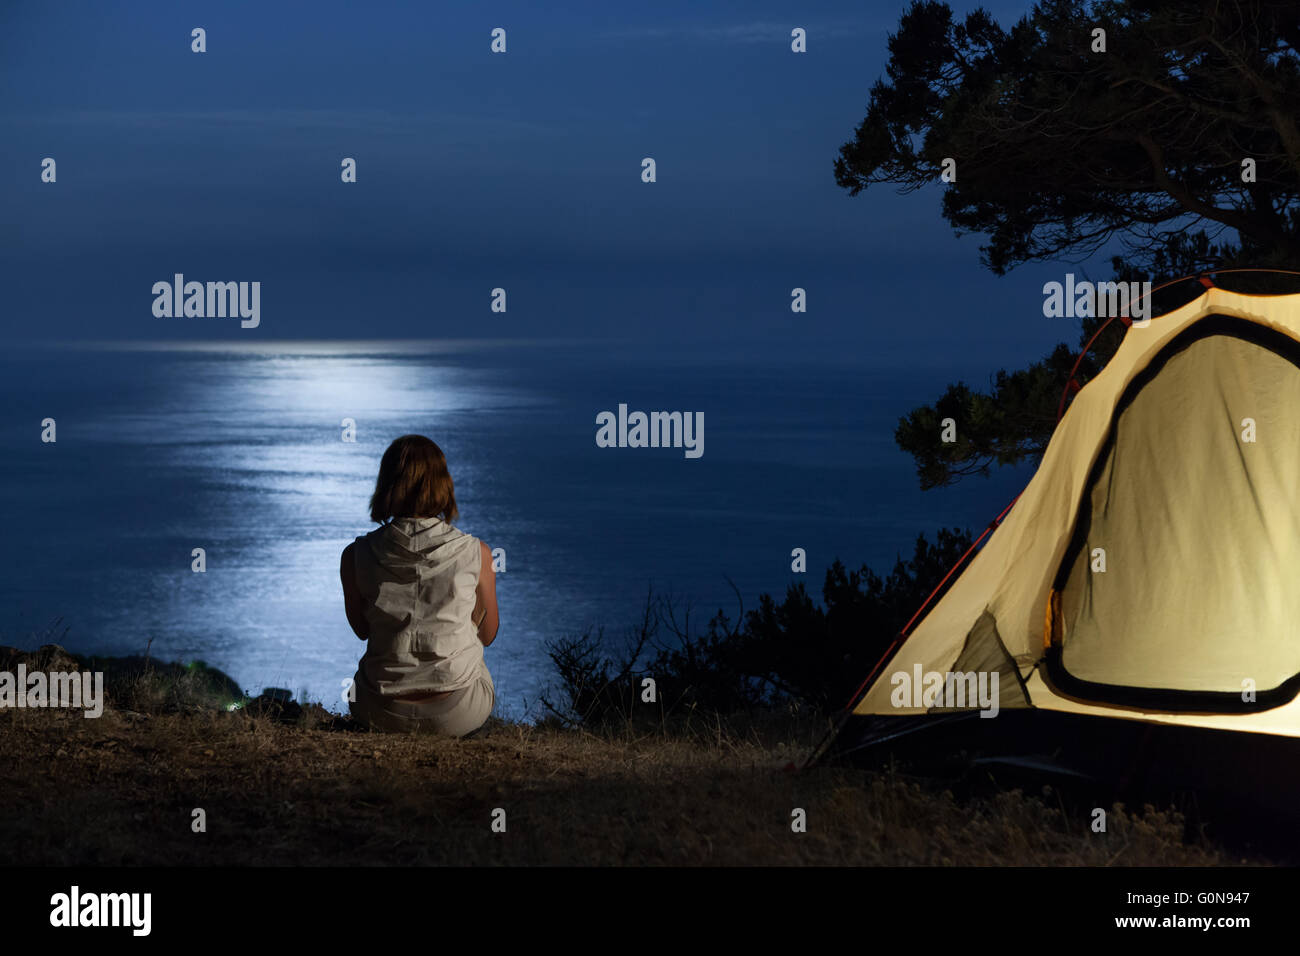 Alone woman near tent at night Stock Photo